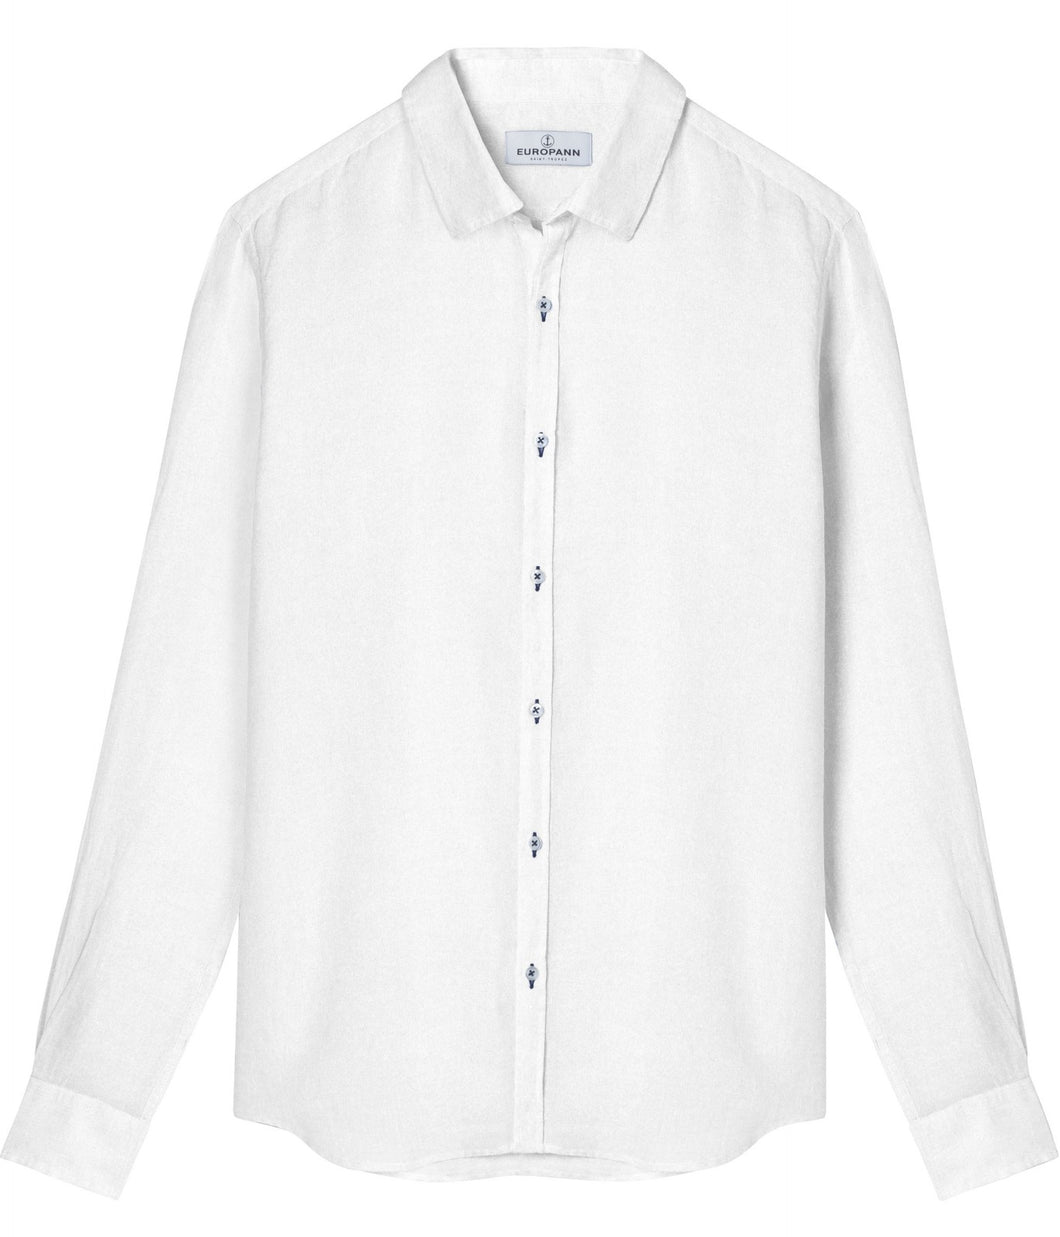 Jonas White - Plain Linen Shirt